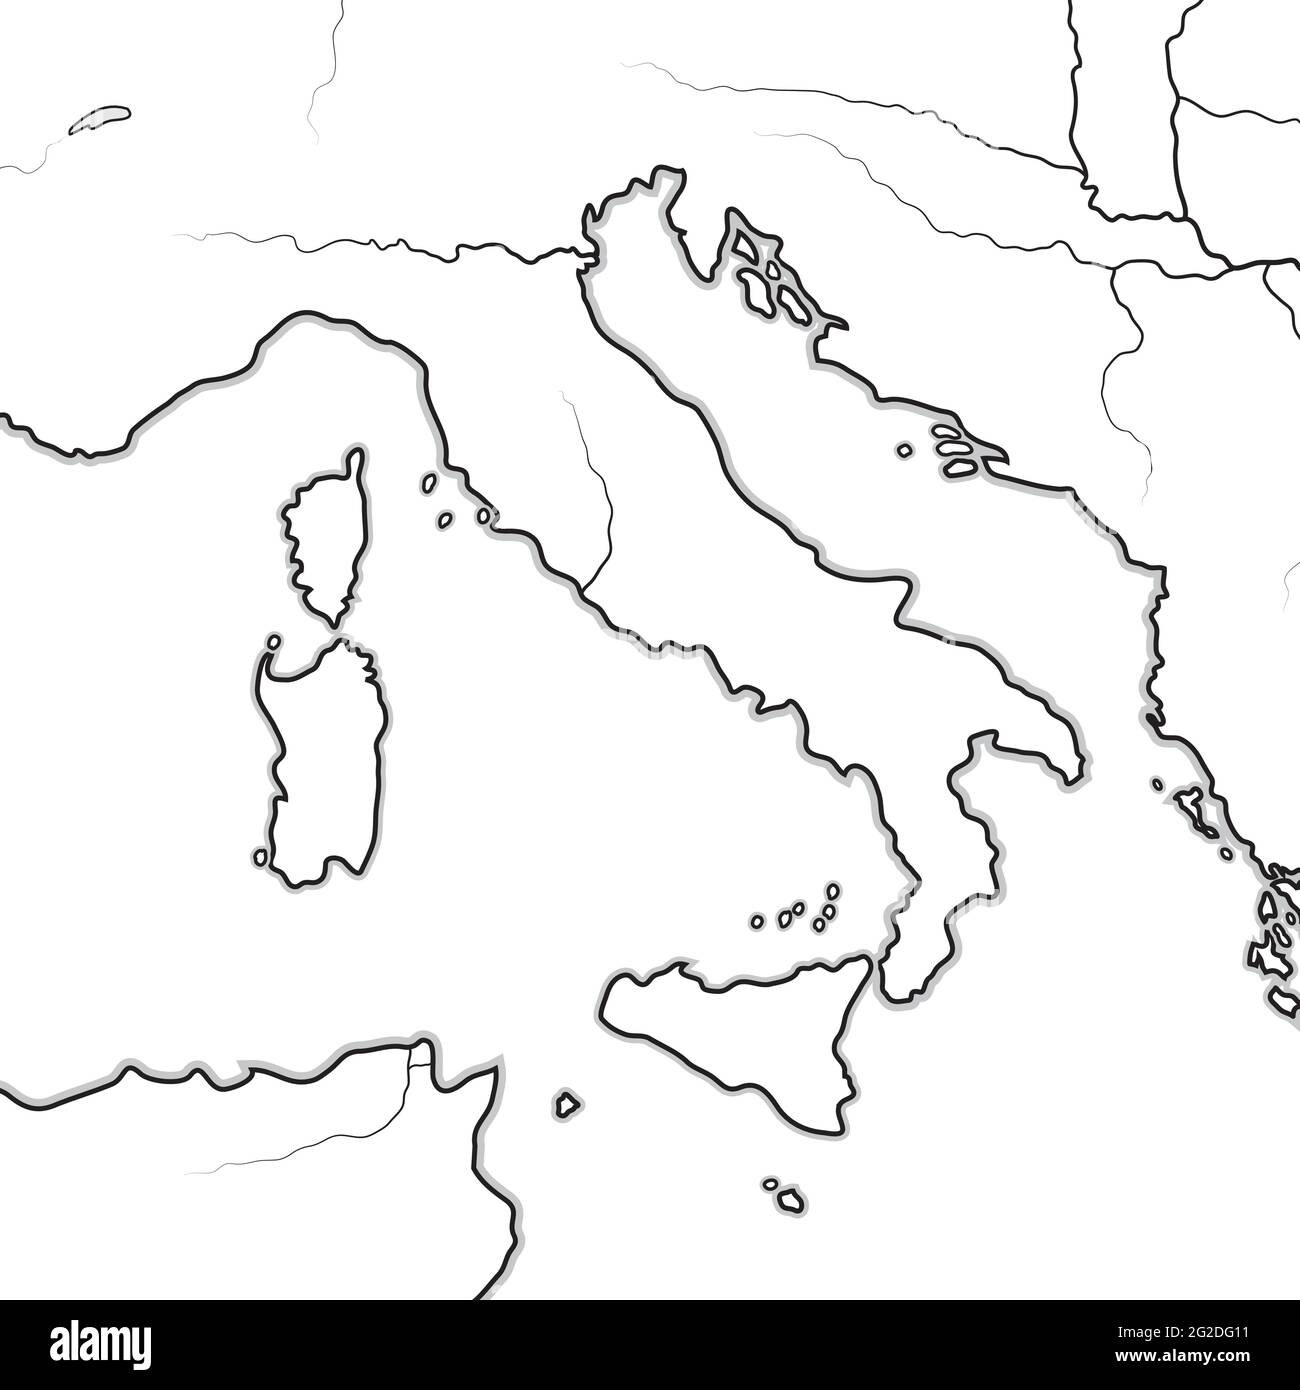 Karte der ITALIENISCHEN Länder: Italien, Toskana, Lombardei, Sizilien, Apenninen, Italienische Halbinsel. Geografische Karte. Stock Vektor